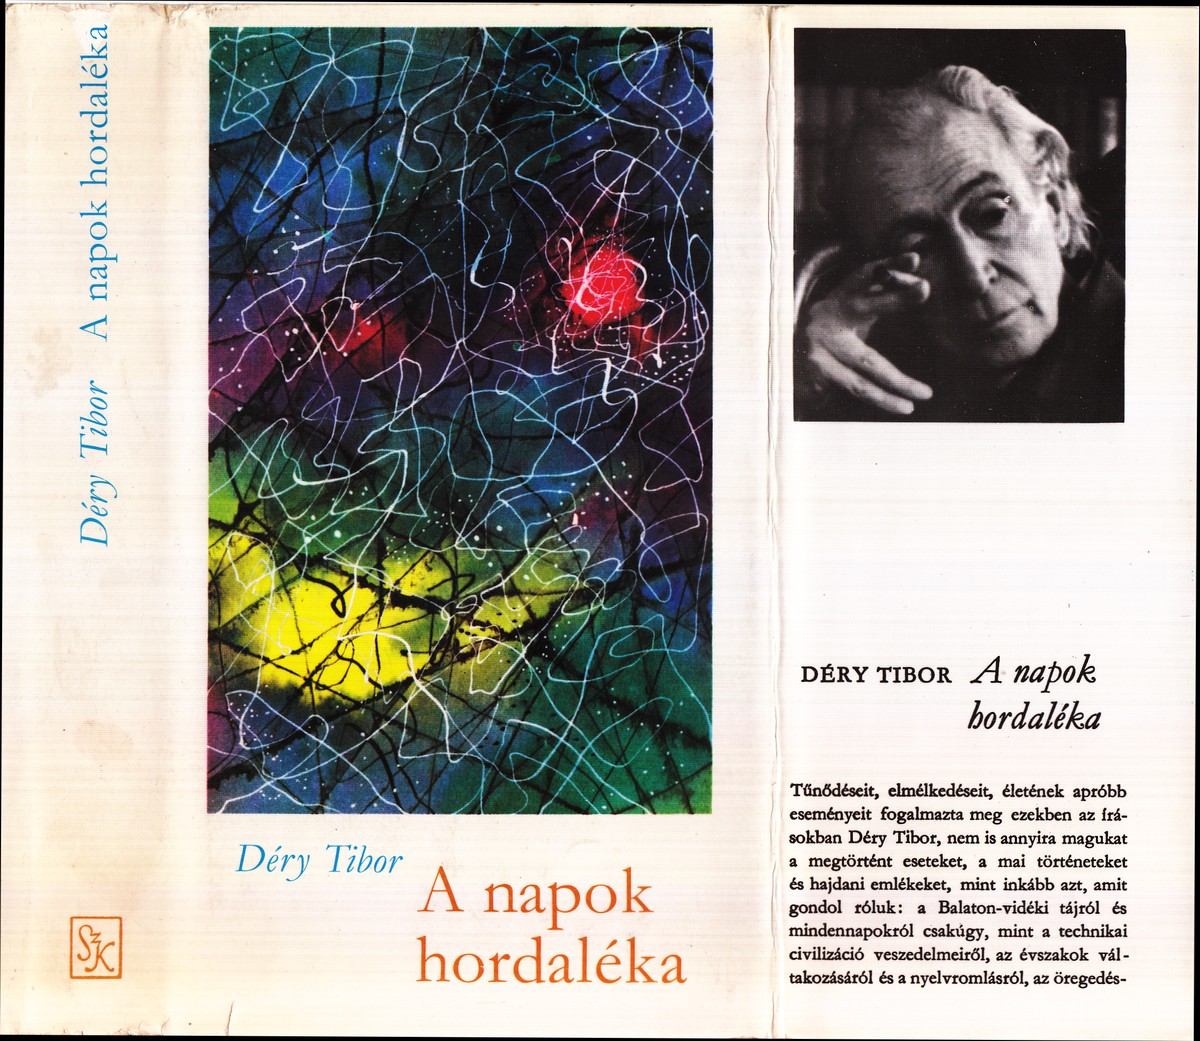 Déry Tibor: A napok hordaléka, Déry Tibor | Library OPAC